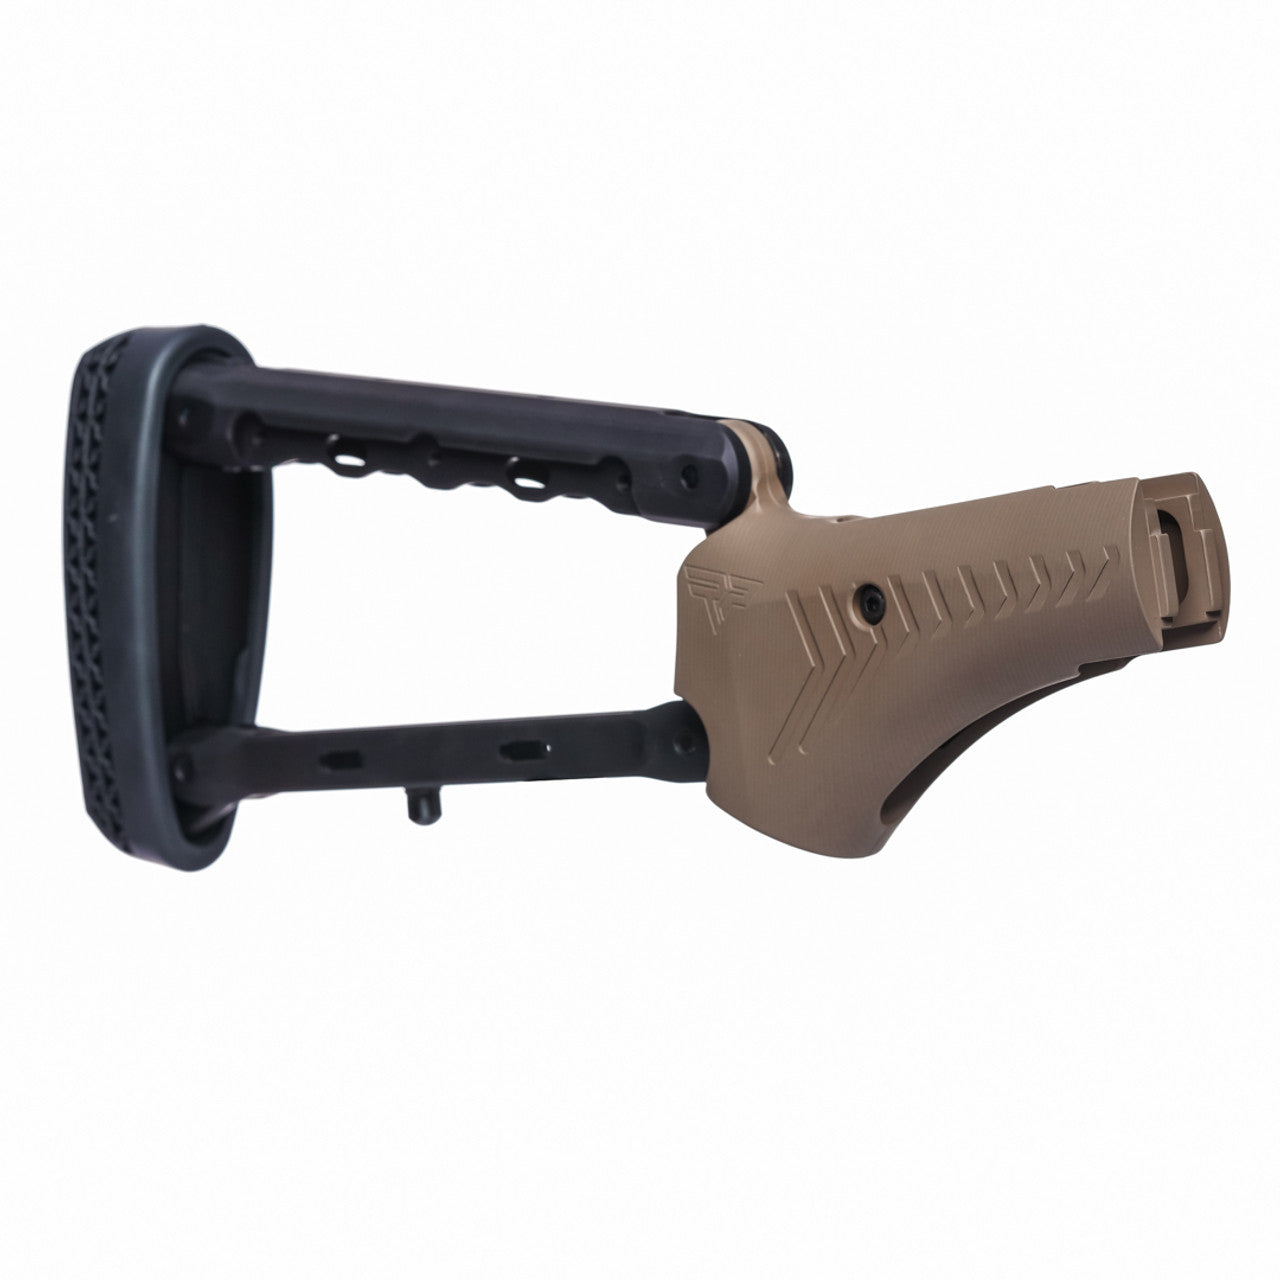 Henry Lever Stock - M-LOK Adjustable Pistol Grip 